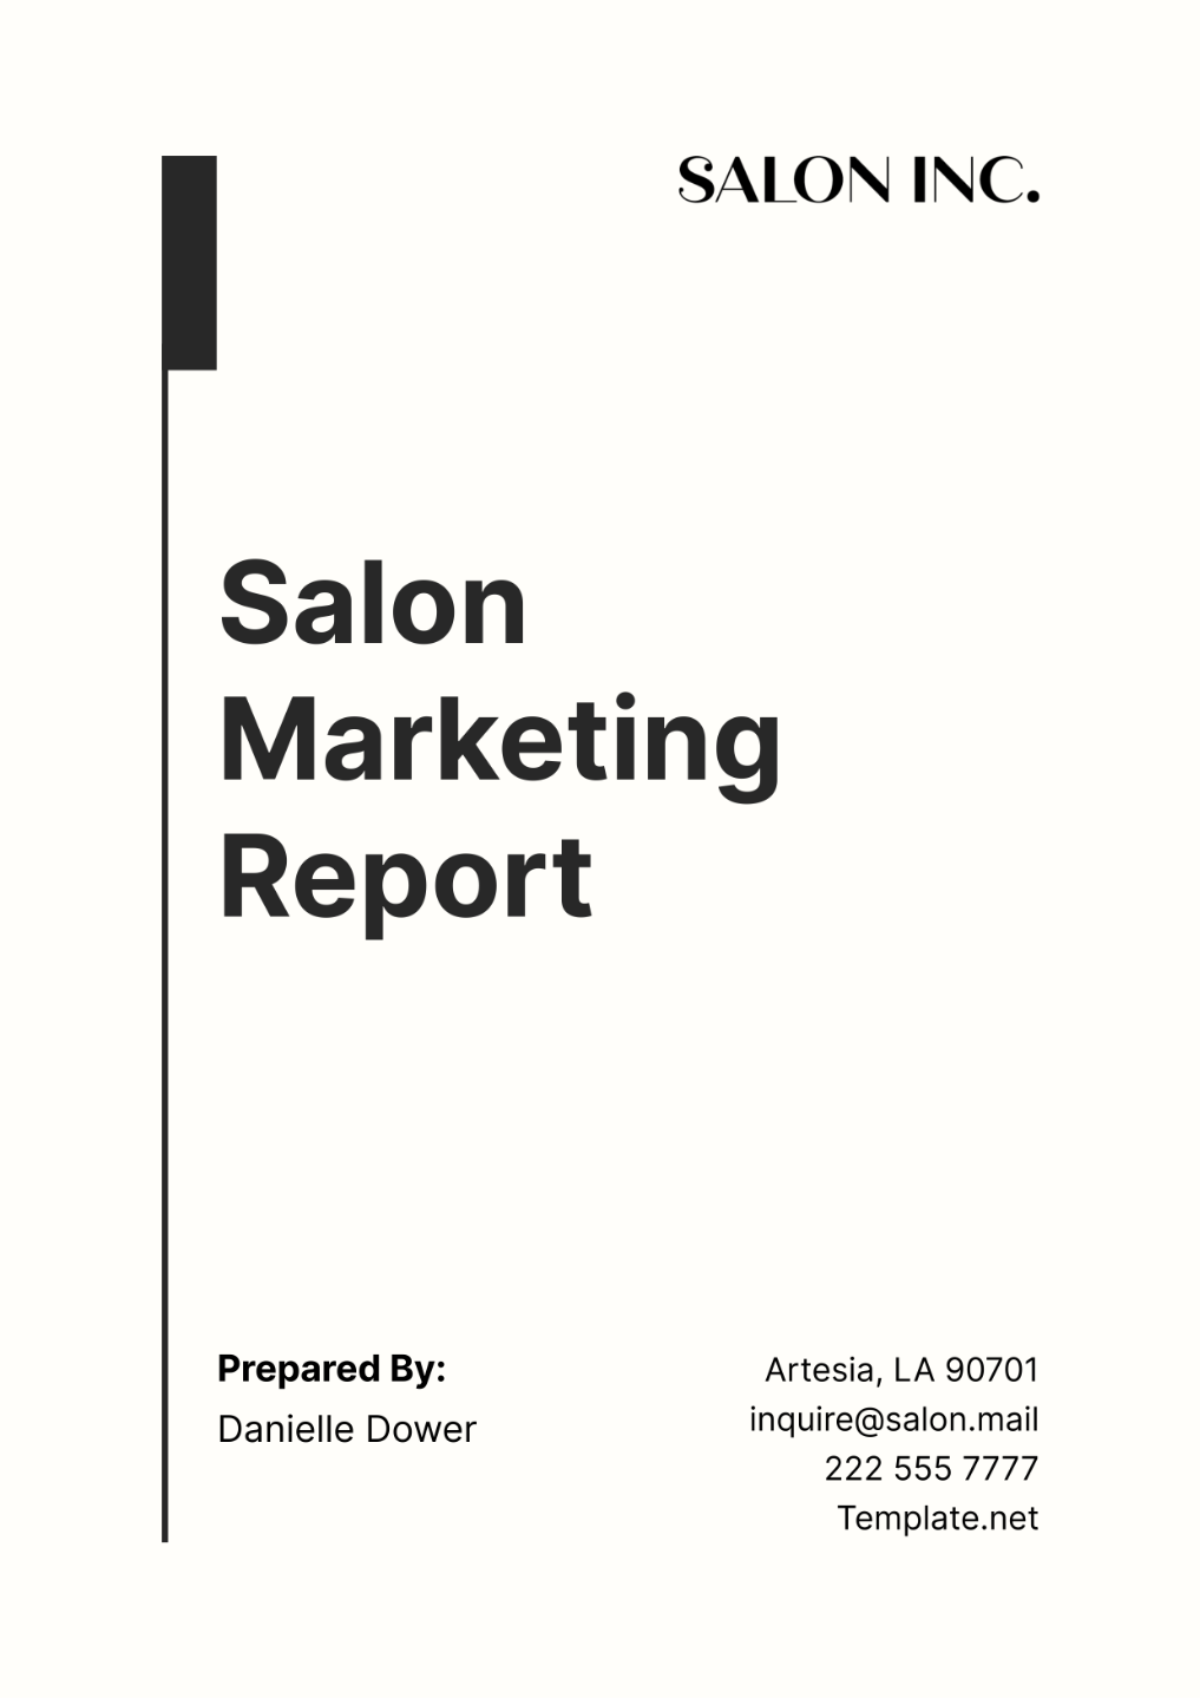 Salon Marketing Report Template